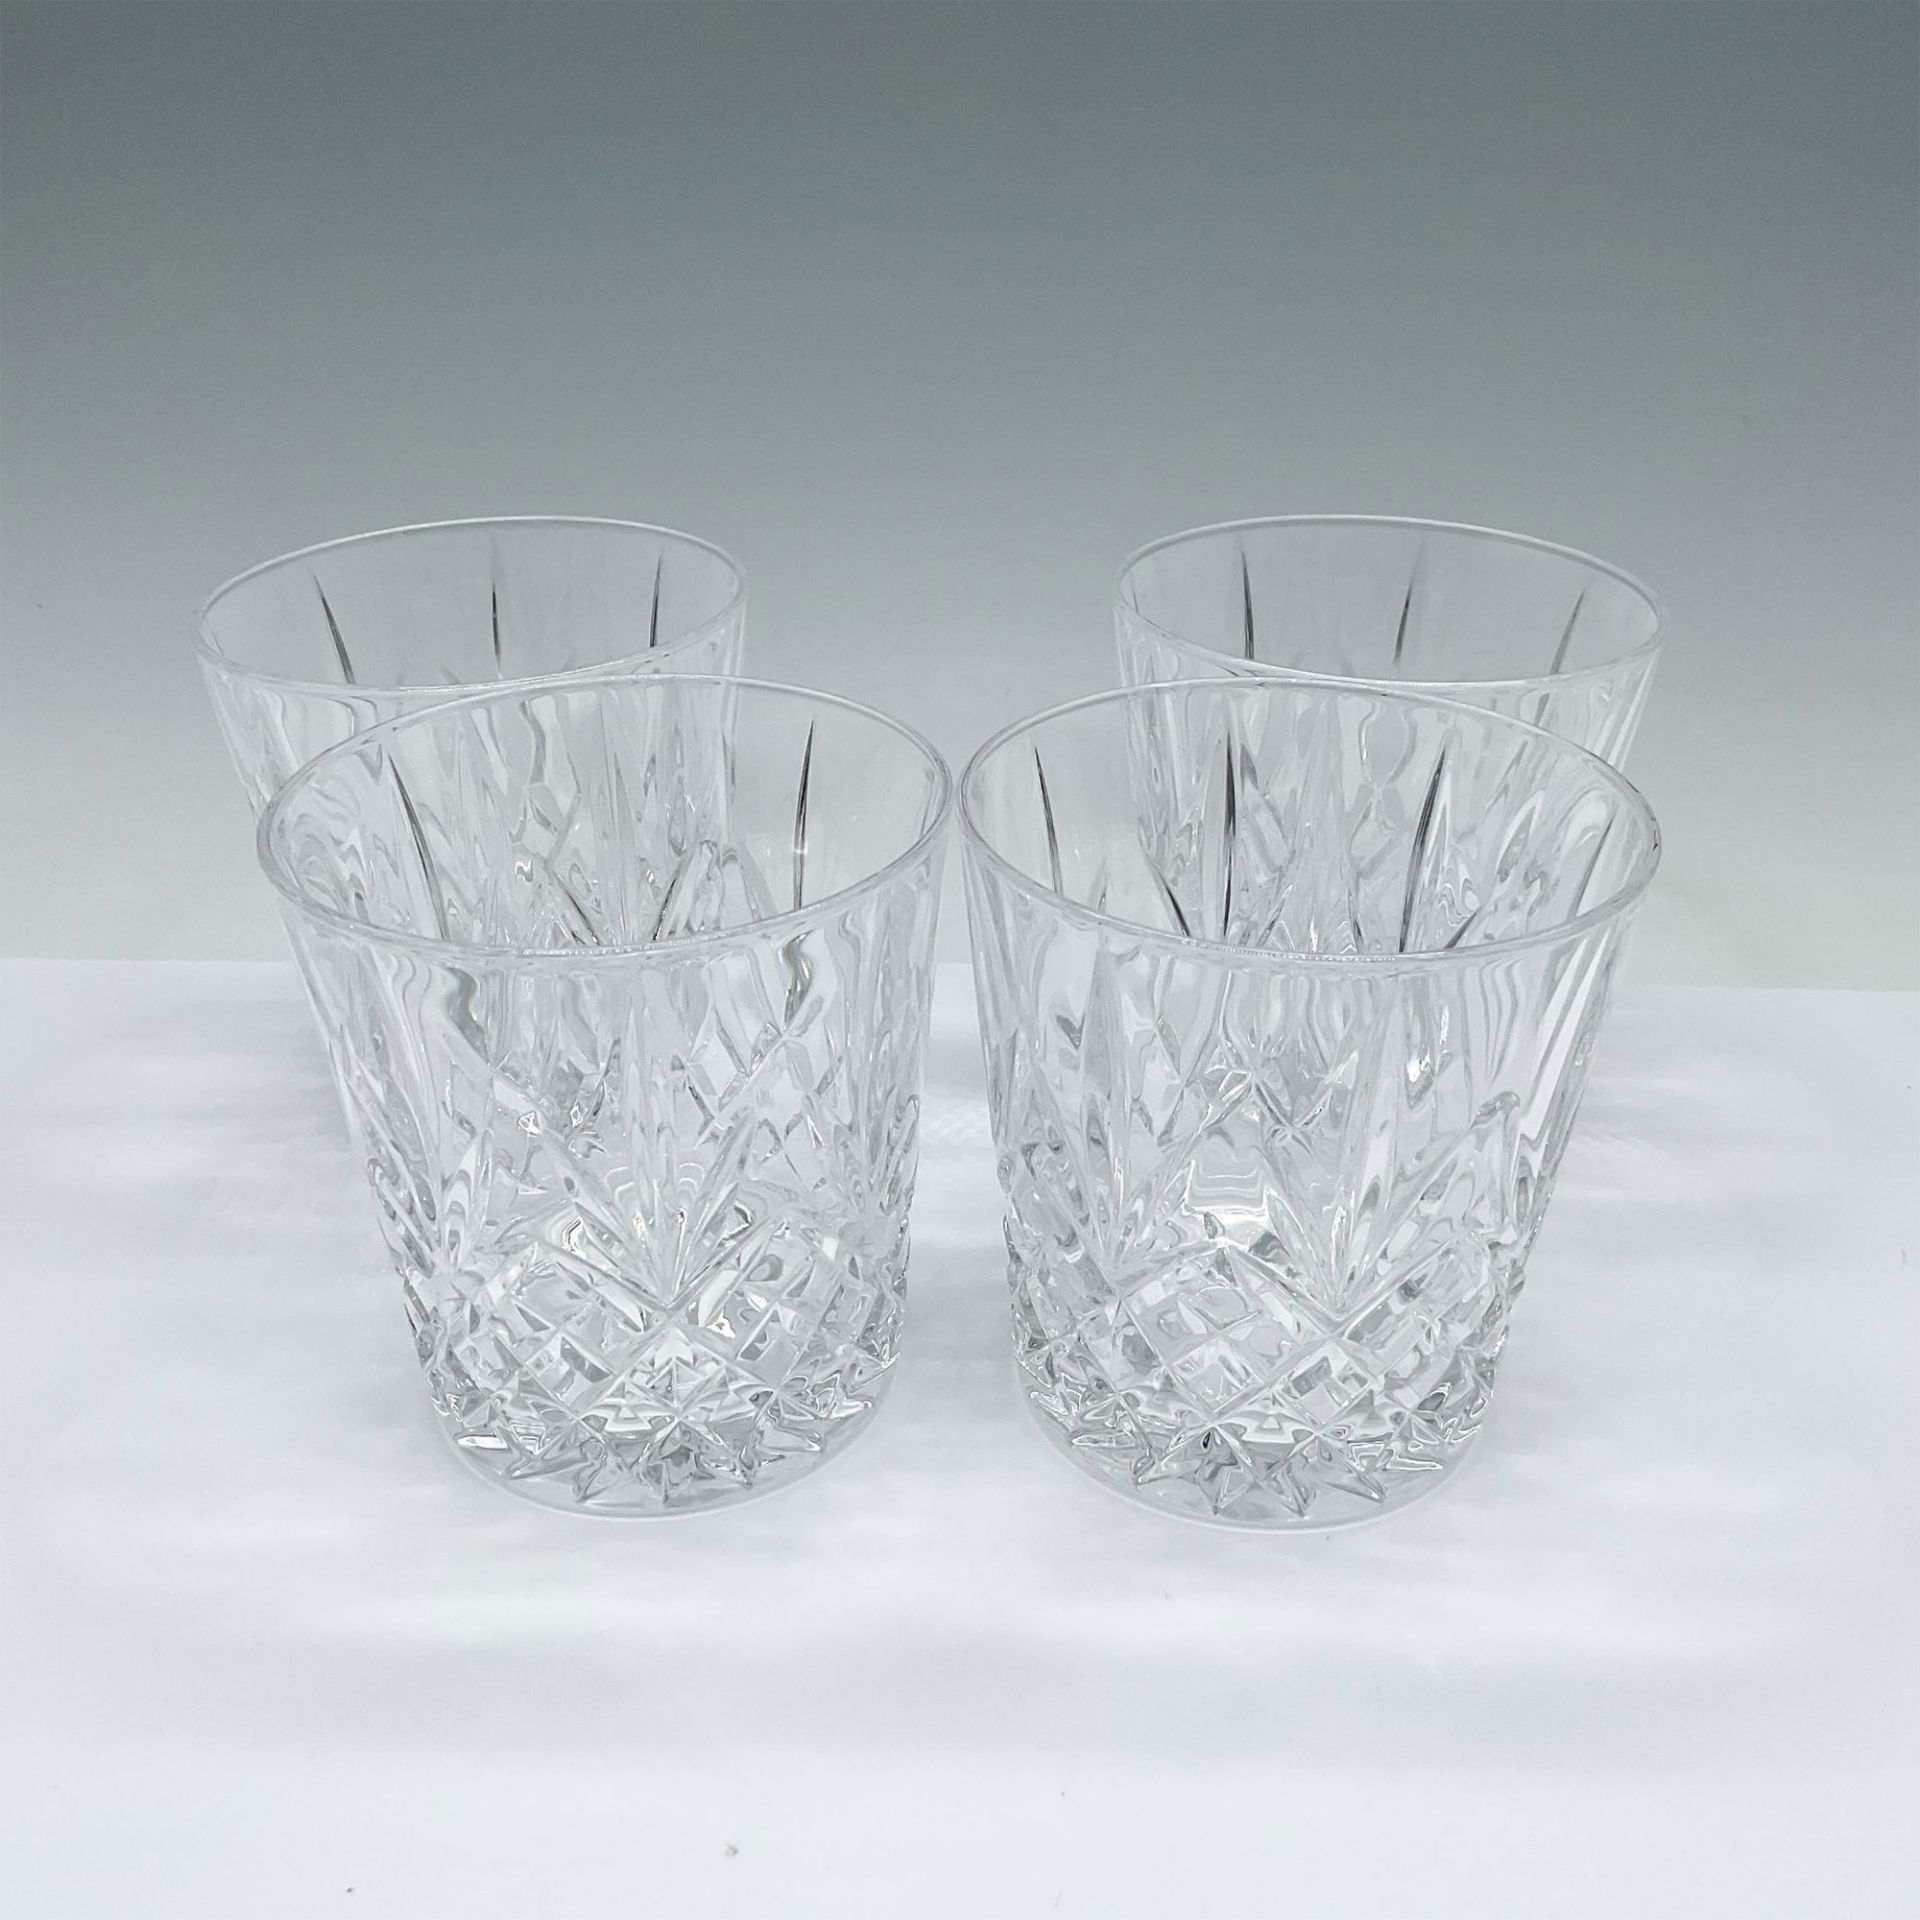 4pc Crystal Rocks Glasses - Image 2 of 3